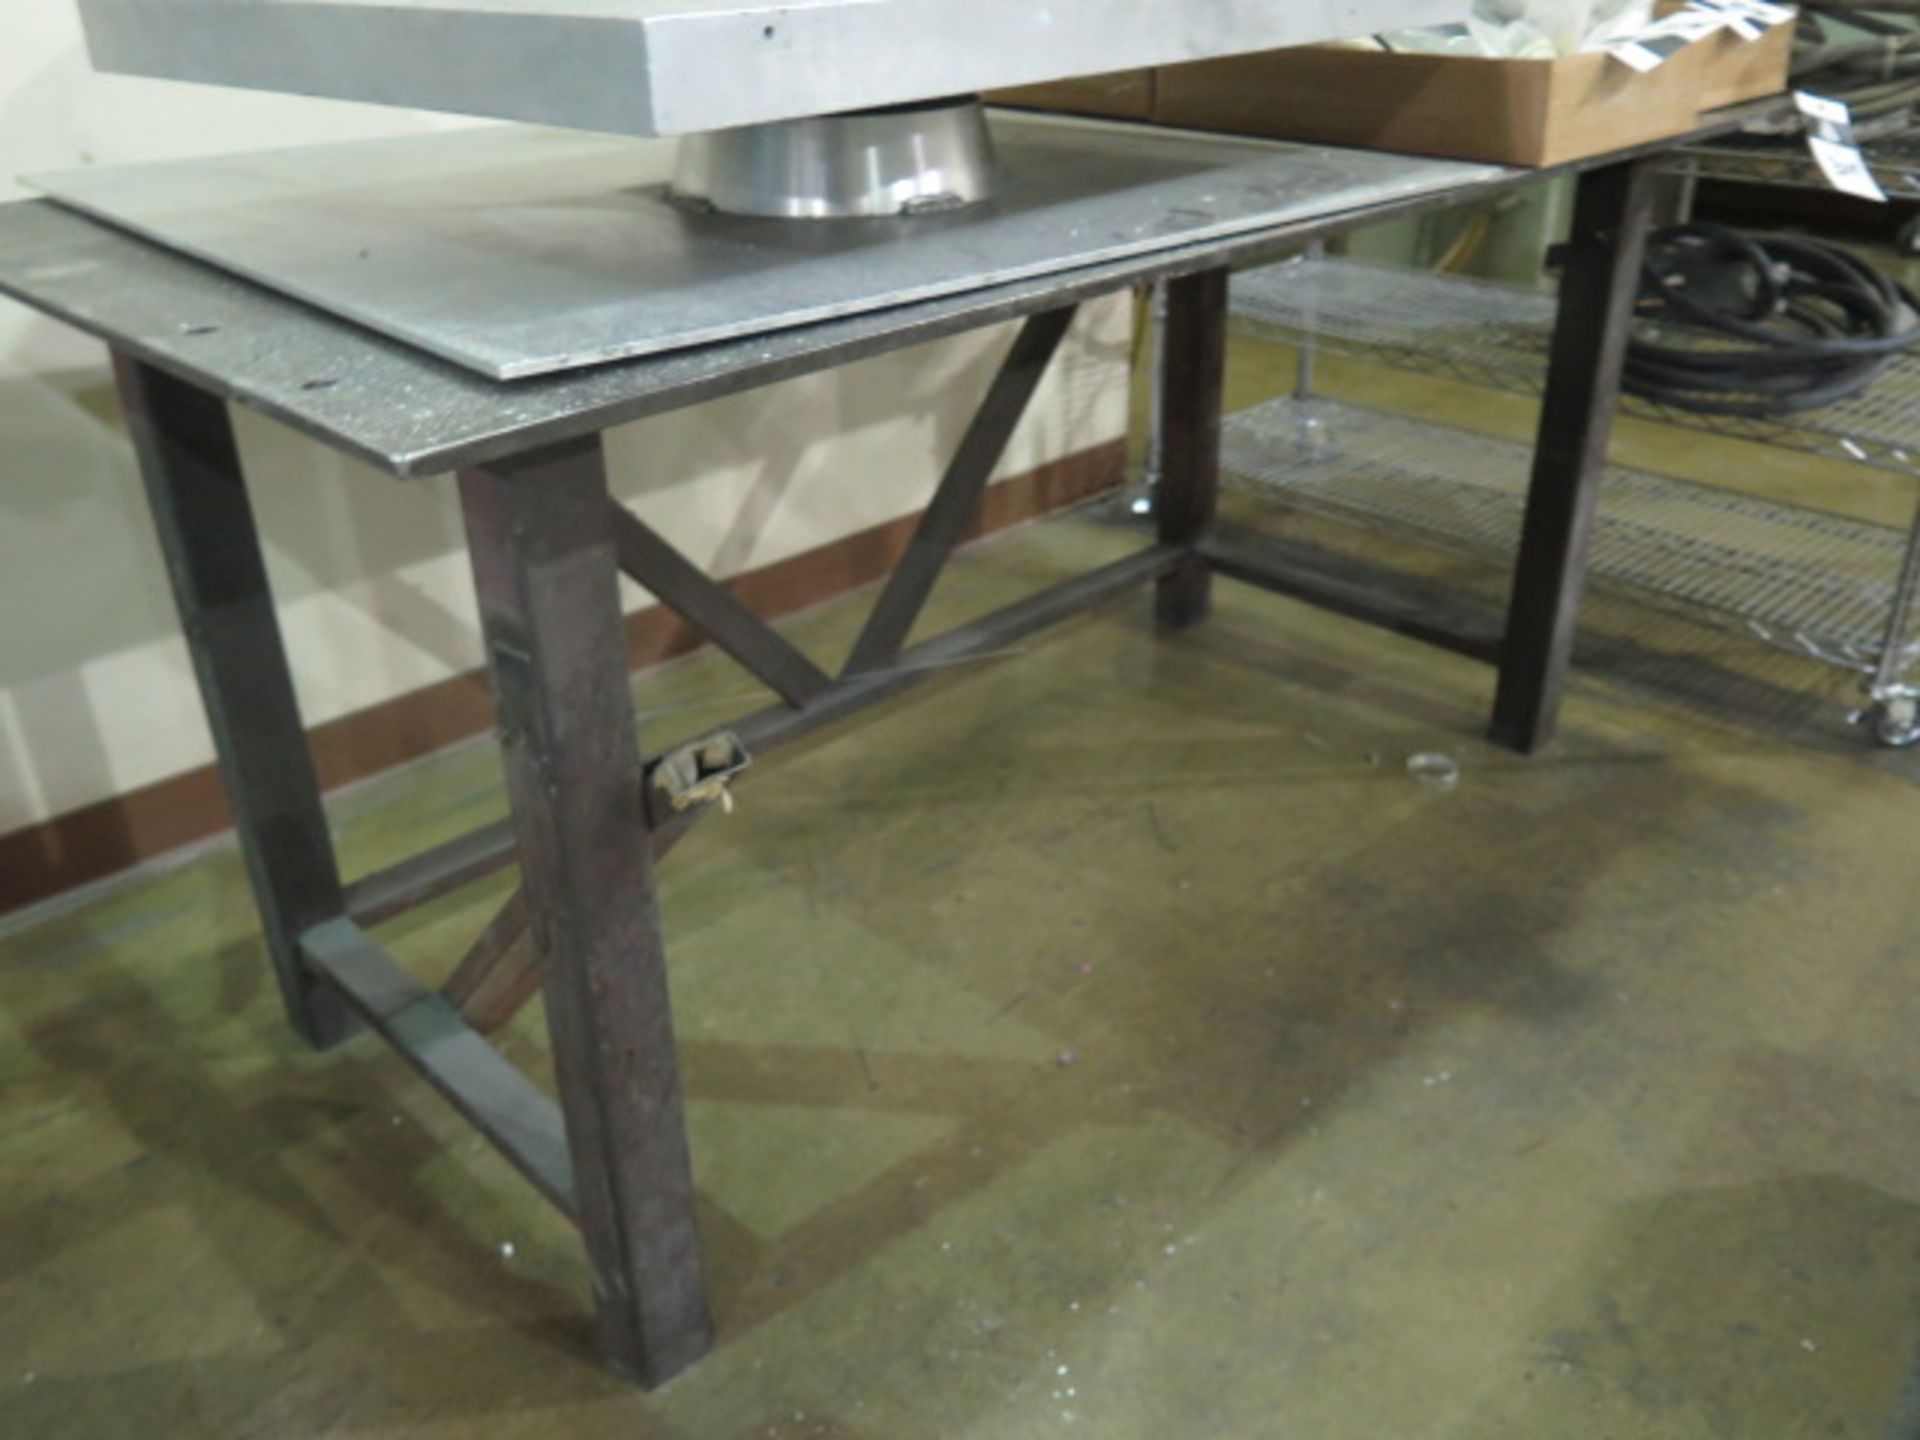 34” x 64” Welding Table (SOLD AS-IS - NO WARRANTY)